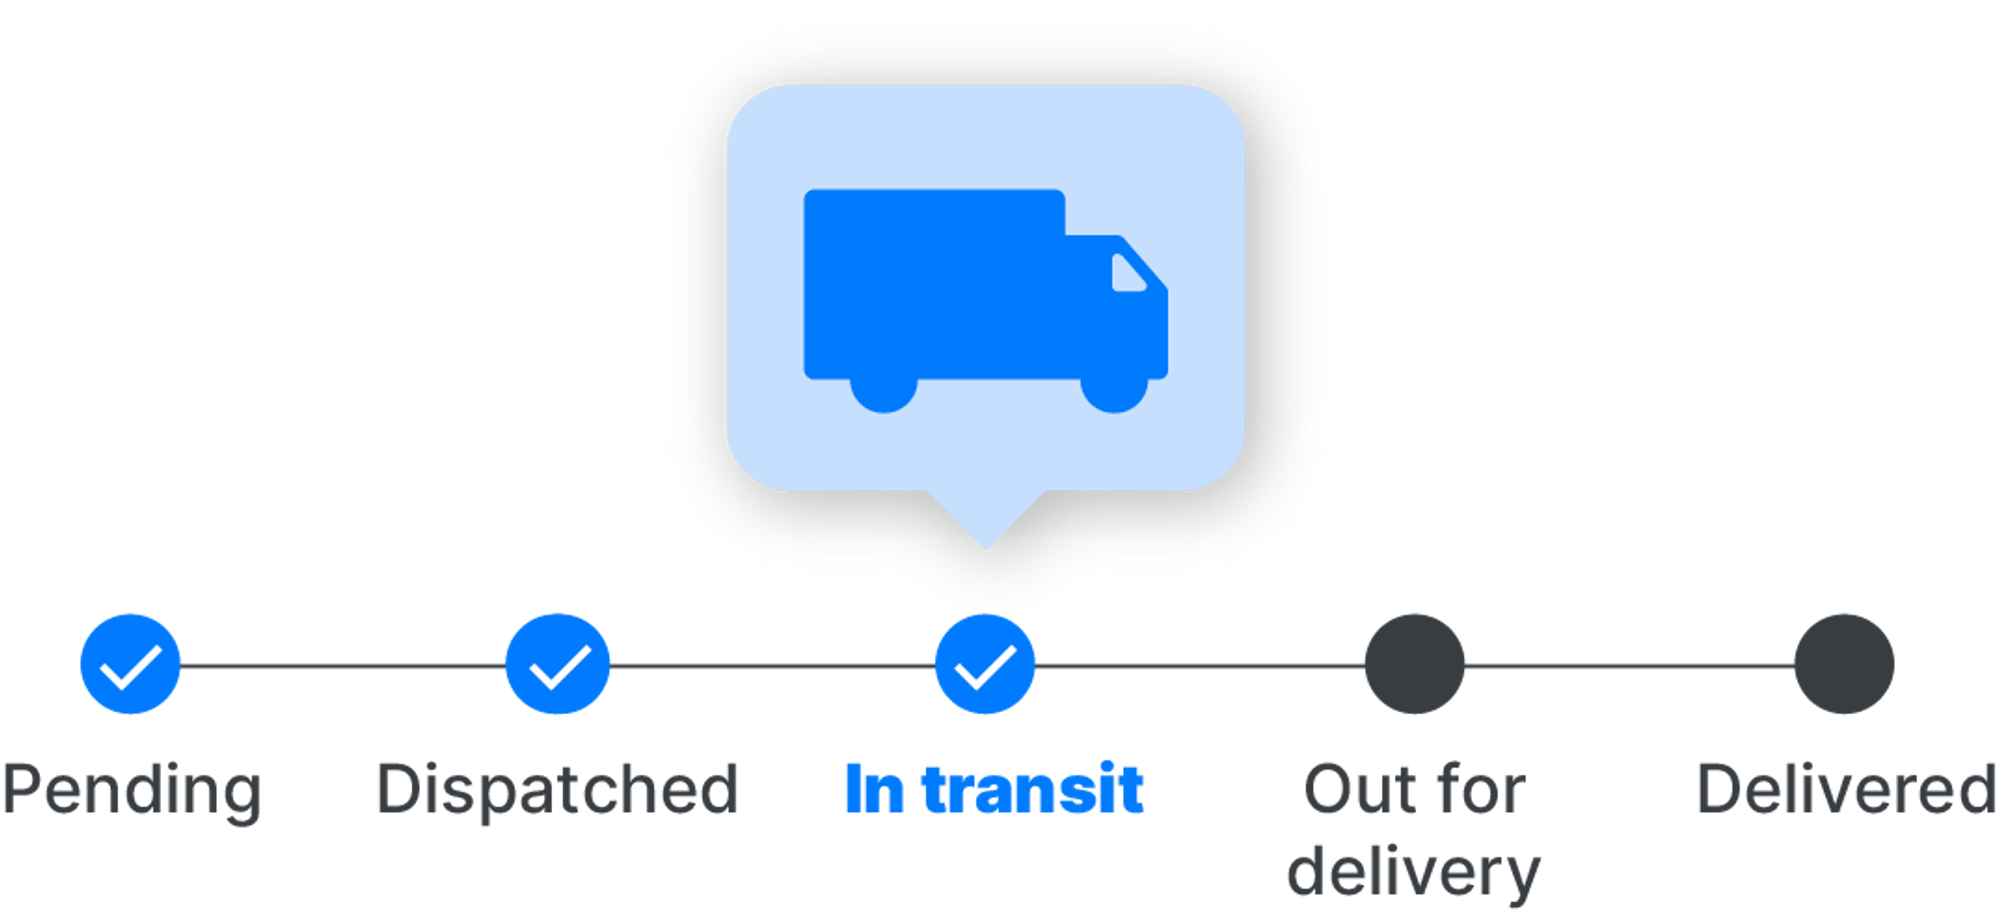 Delivery Stages In transit illustration